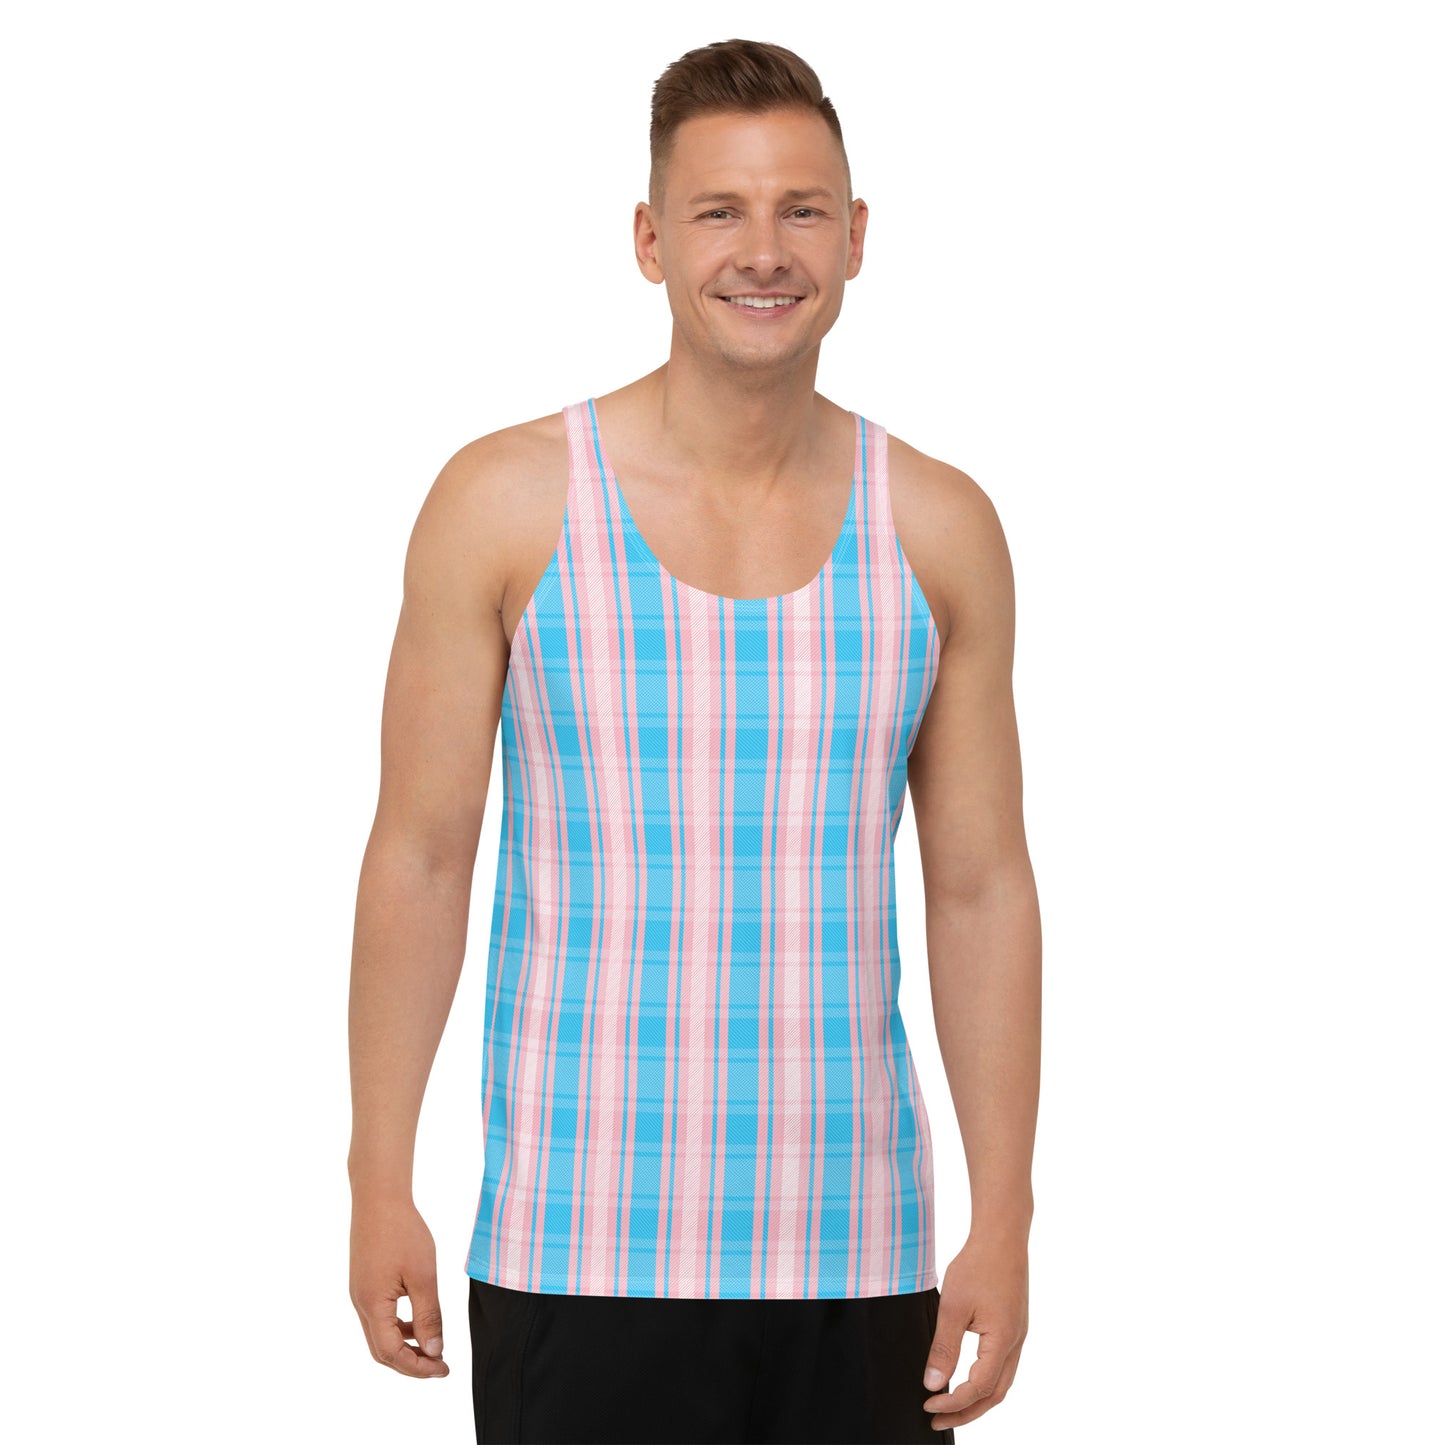 Transgender Pride Plaid Unisex Tank Top - LGBTQIA Pink White Blue Trans Flag Shirt - Parade Club Running